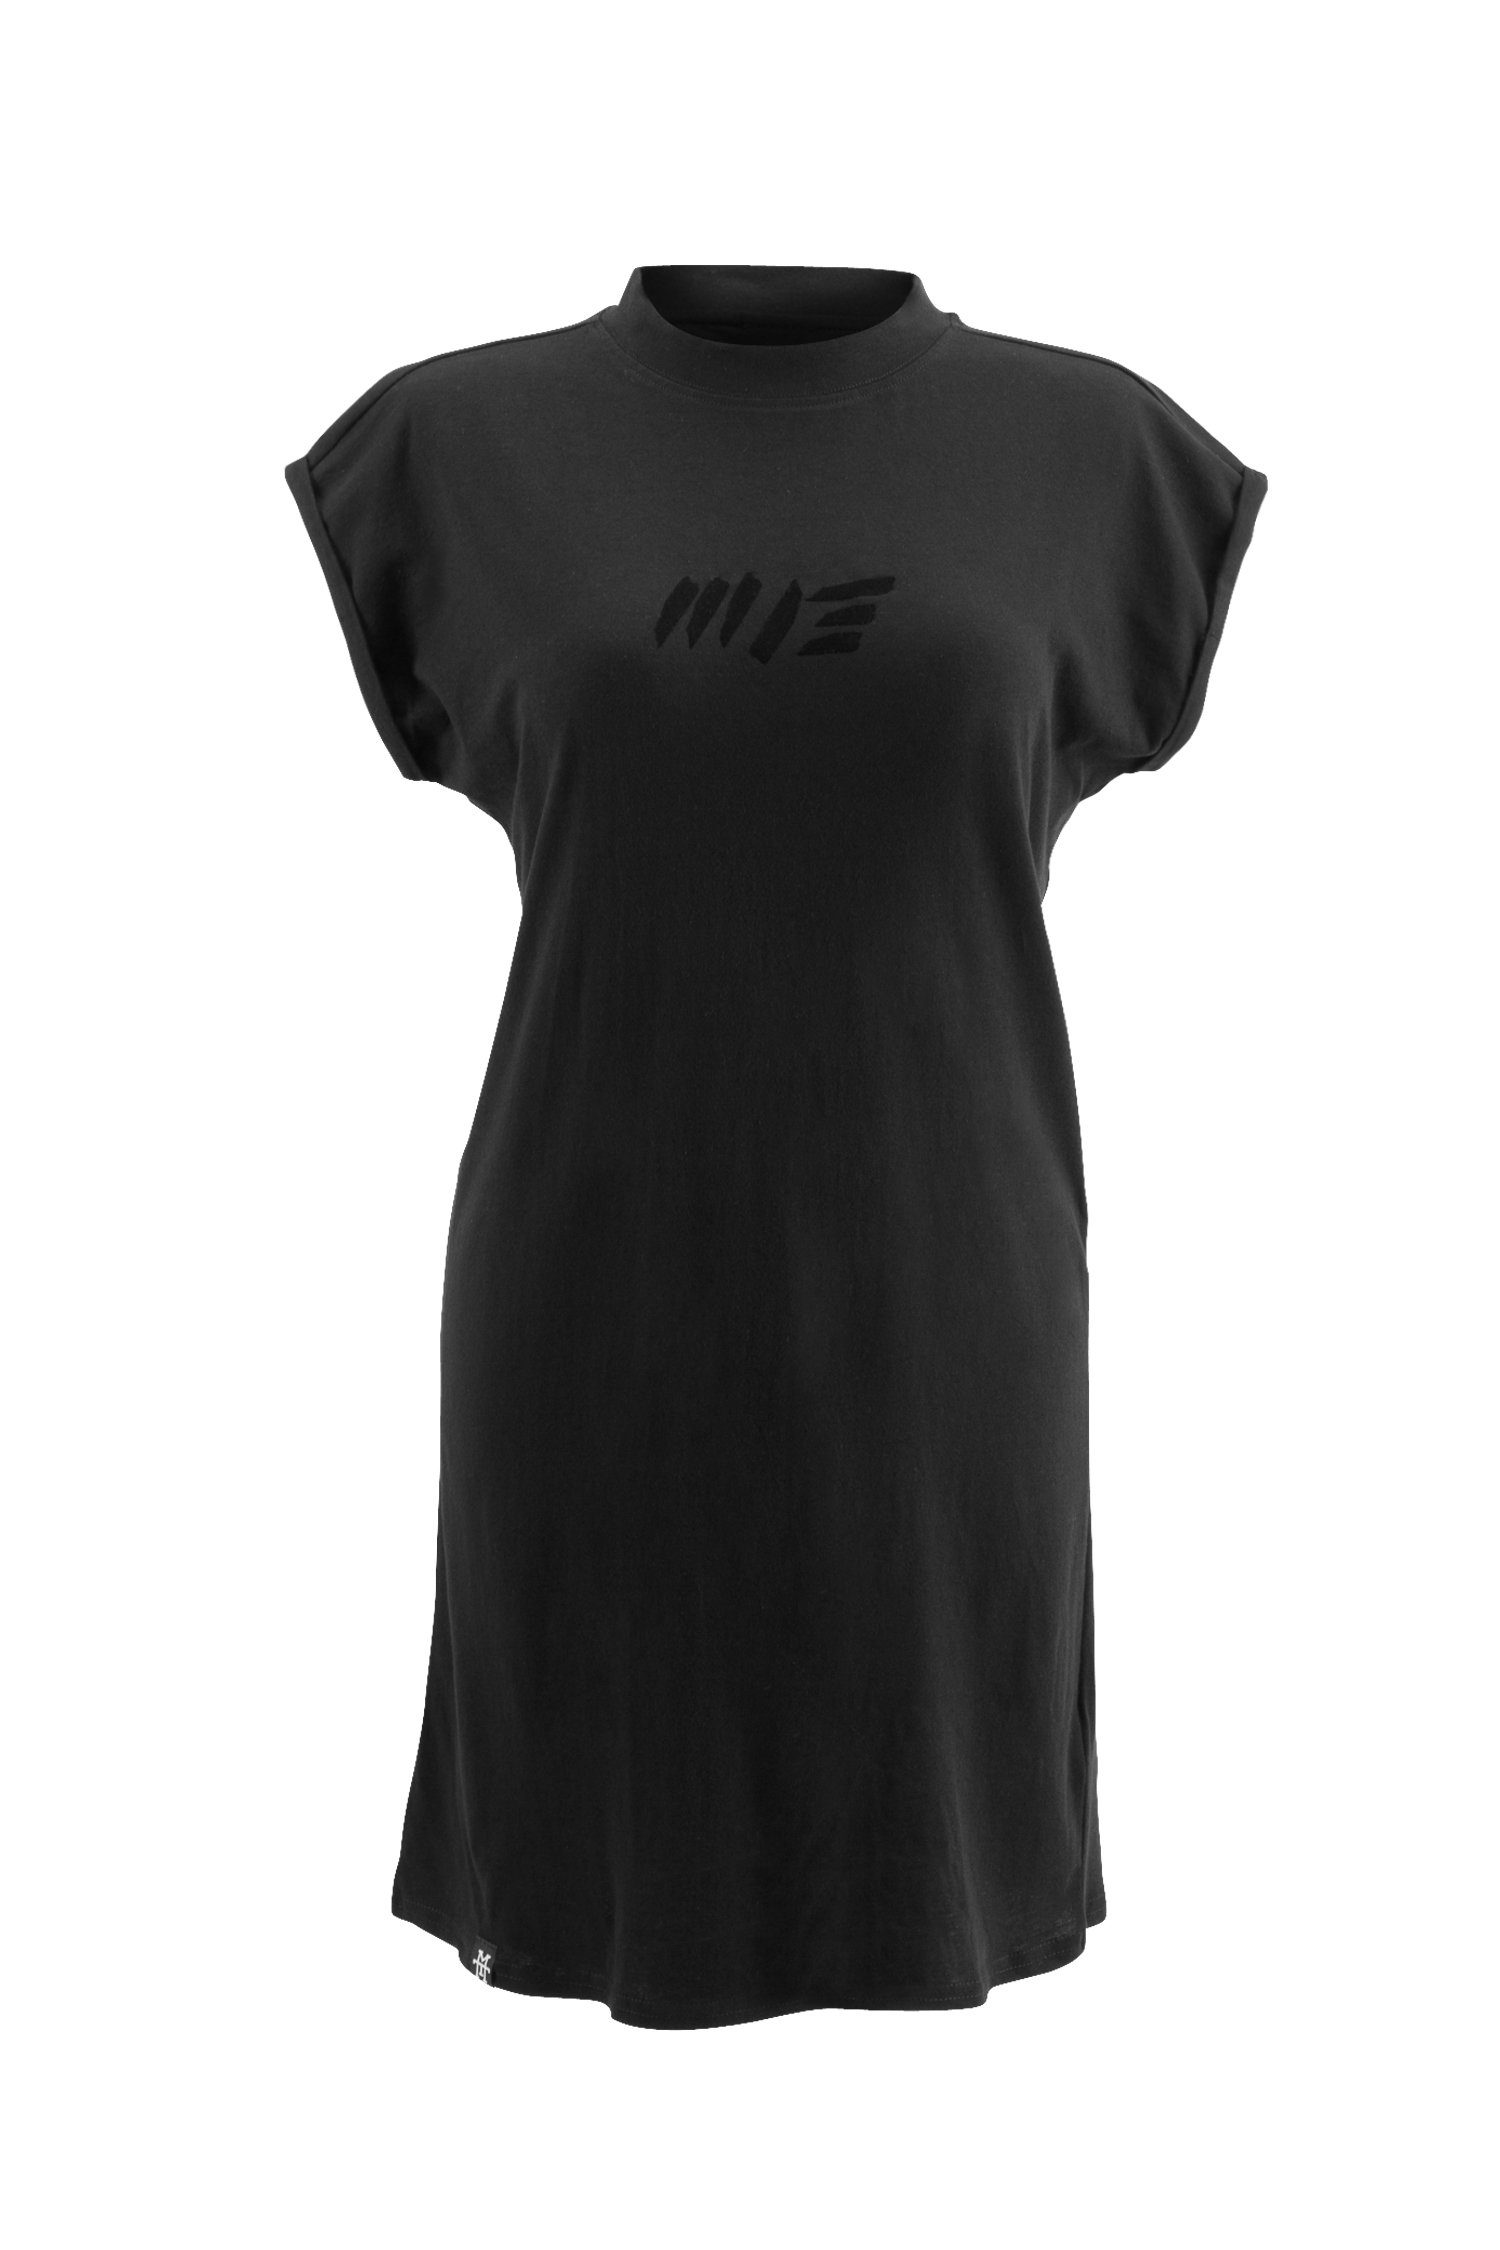 Manufaktur13 Shirtkleid Summer Tee Dress - Sommerkleid, T-Shirt Kleid, Jerseykleid 100% Baumwolle